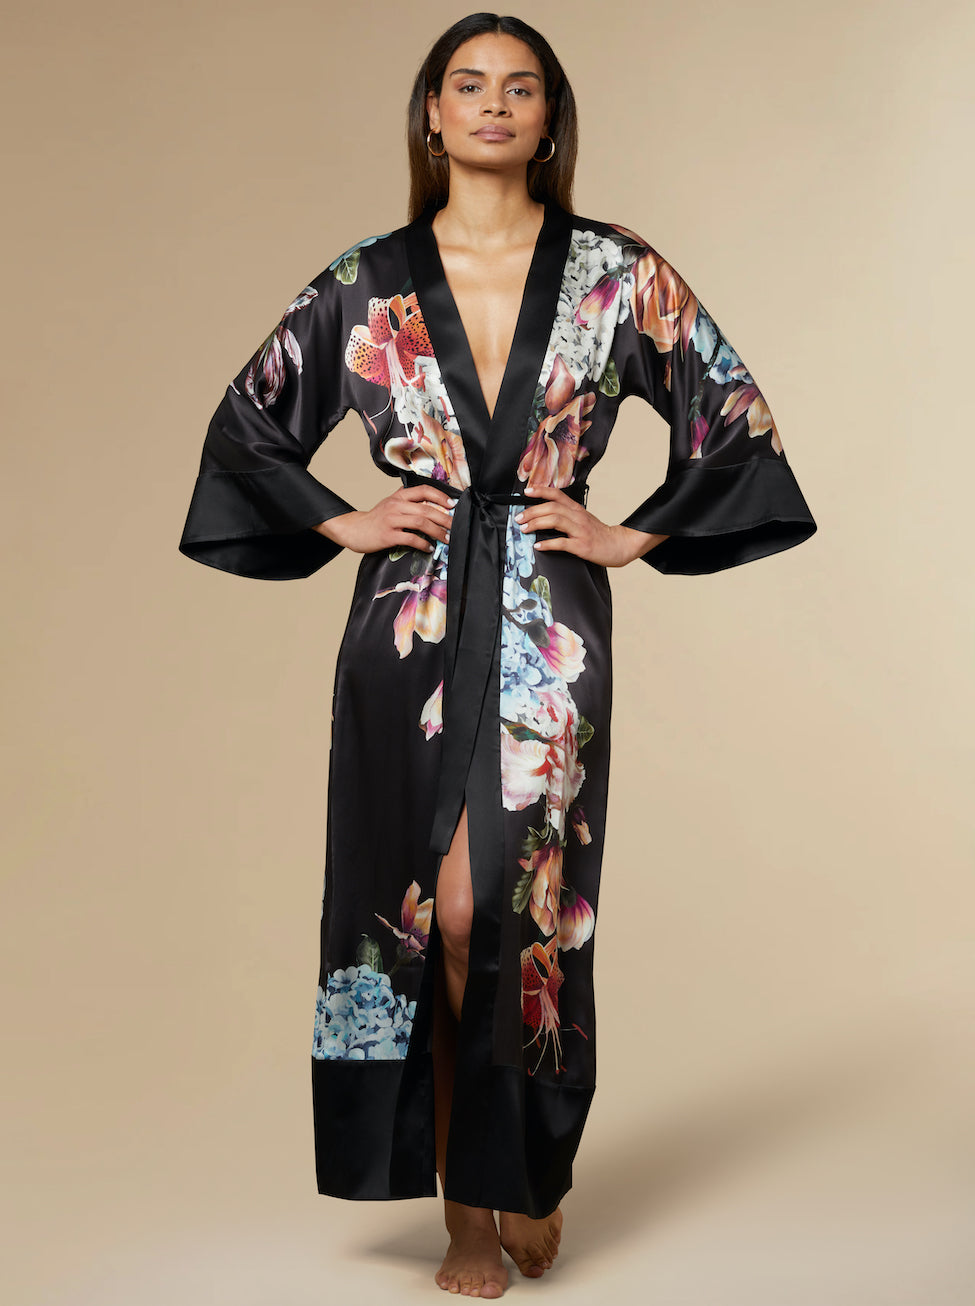 Silk black kimono robe KAYLL made in London with floral print - floor length luxury made of 100% silk satin